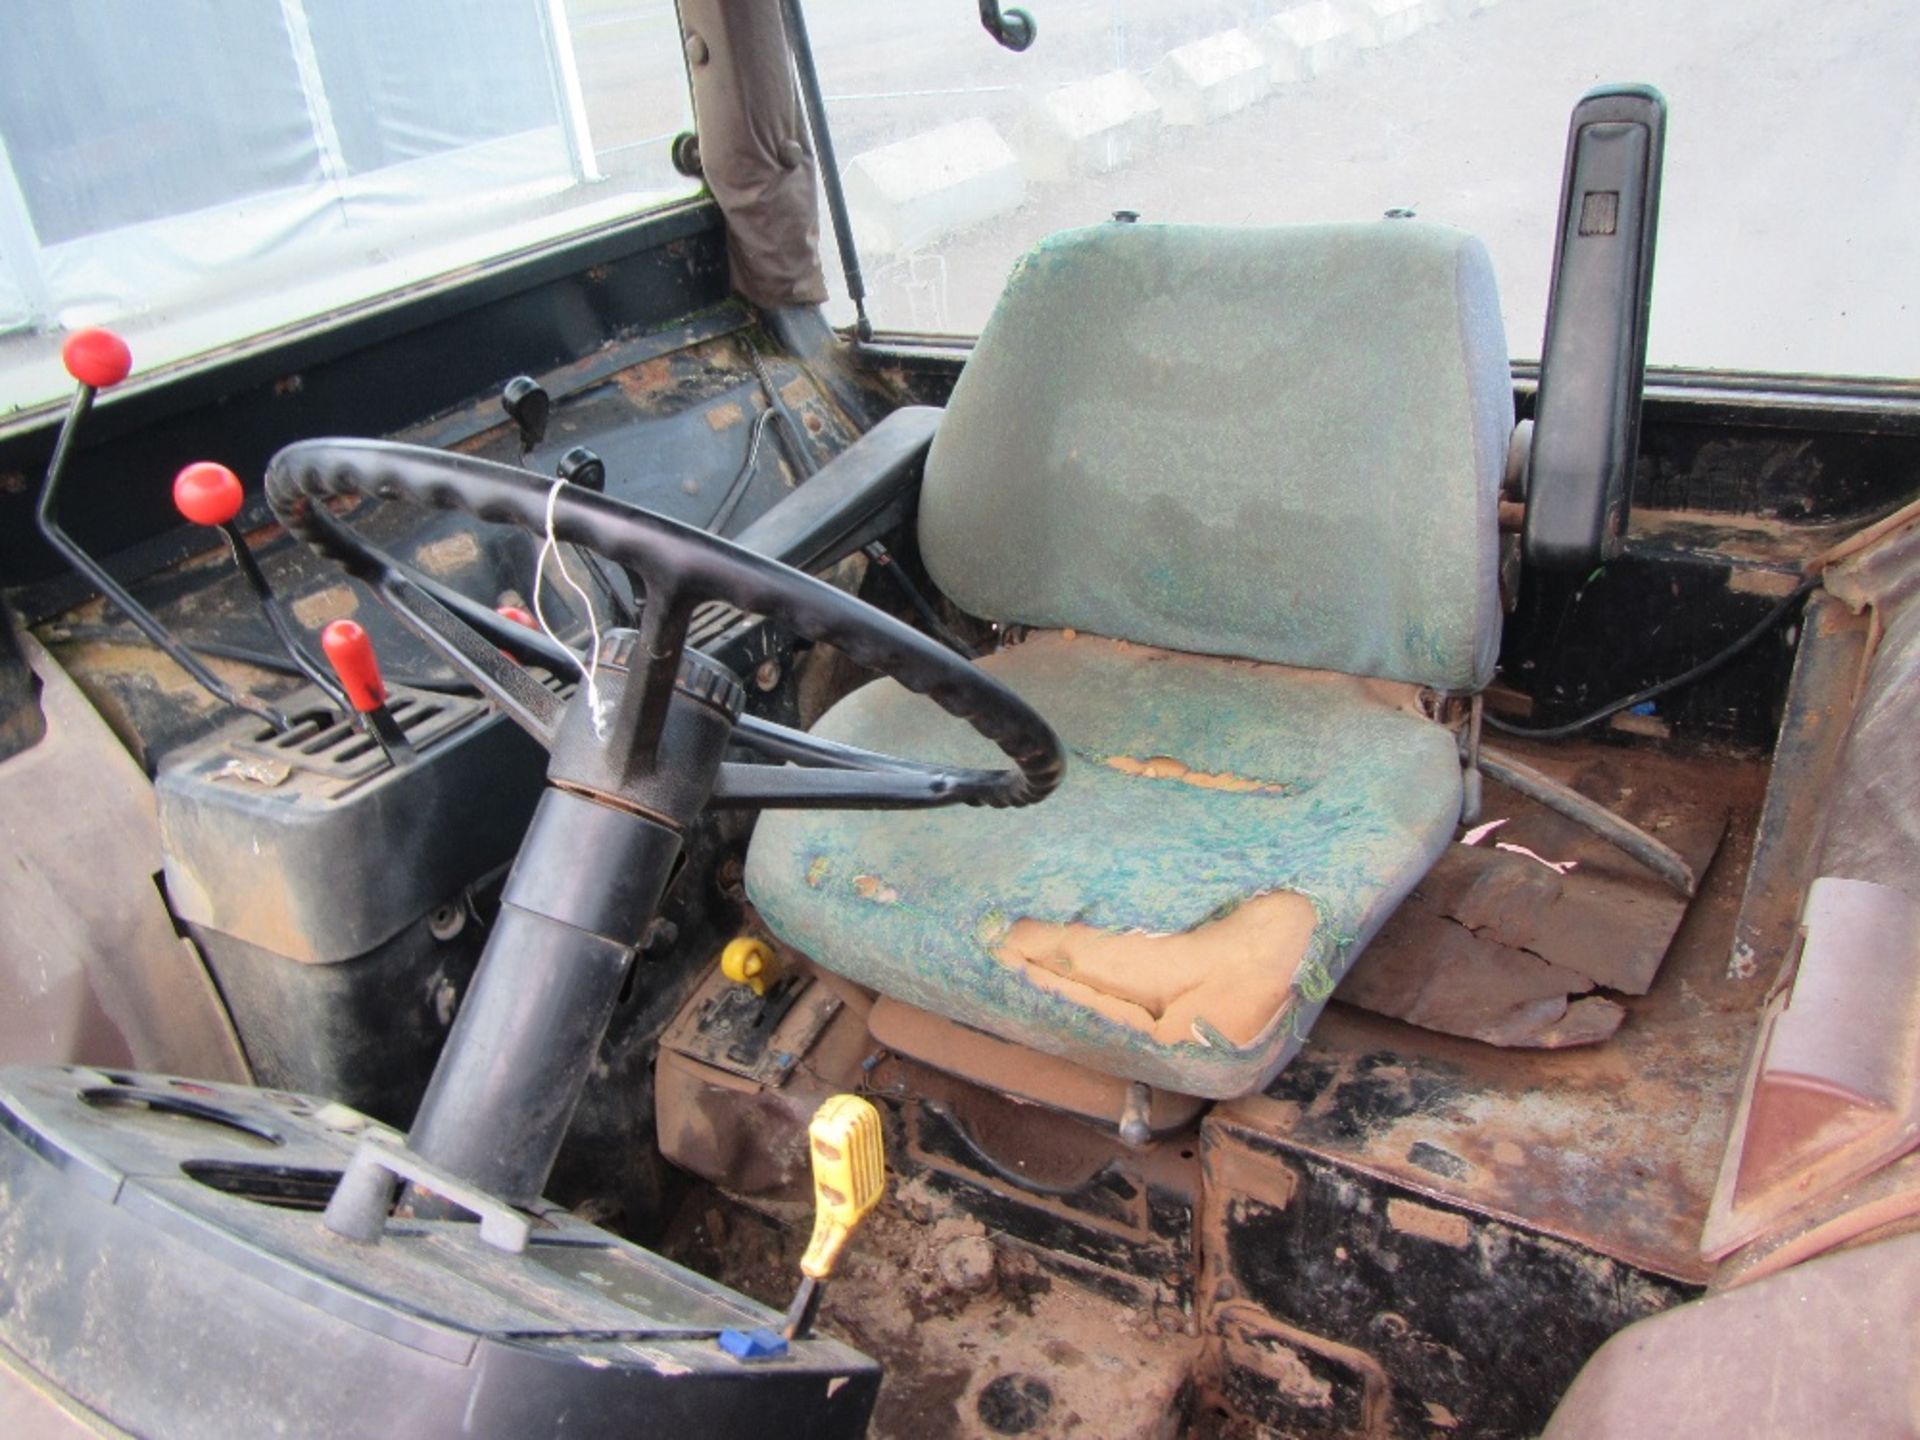 1990 John Deere 2850 4wd Tractor c/w SG2 Cab Ser No 699667 - Image 12 of 17